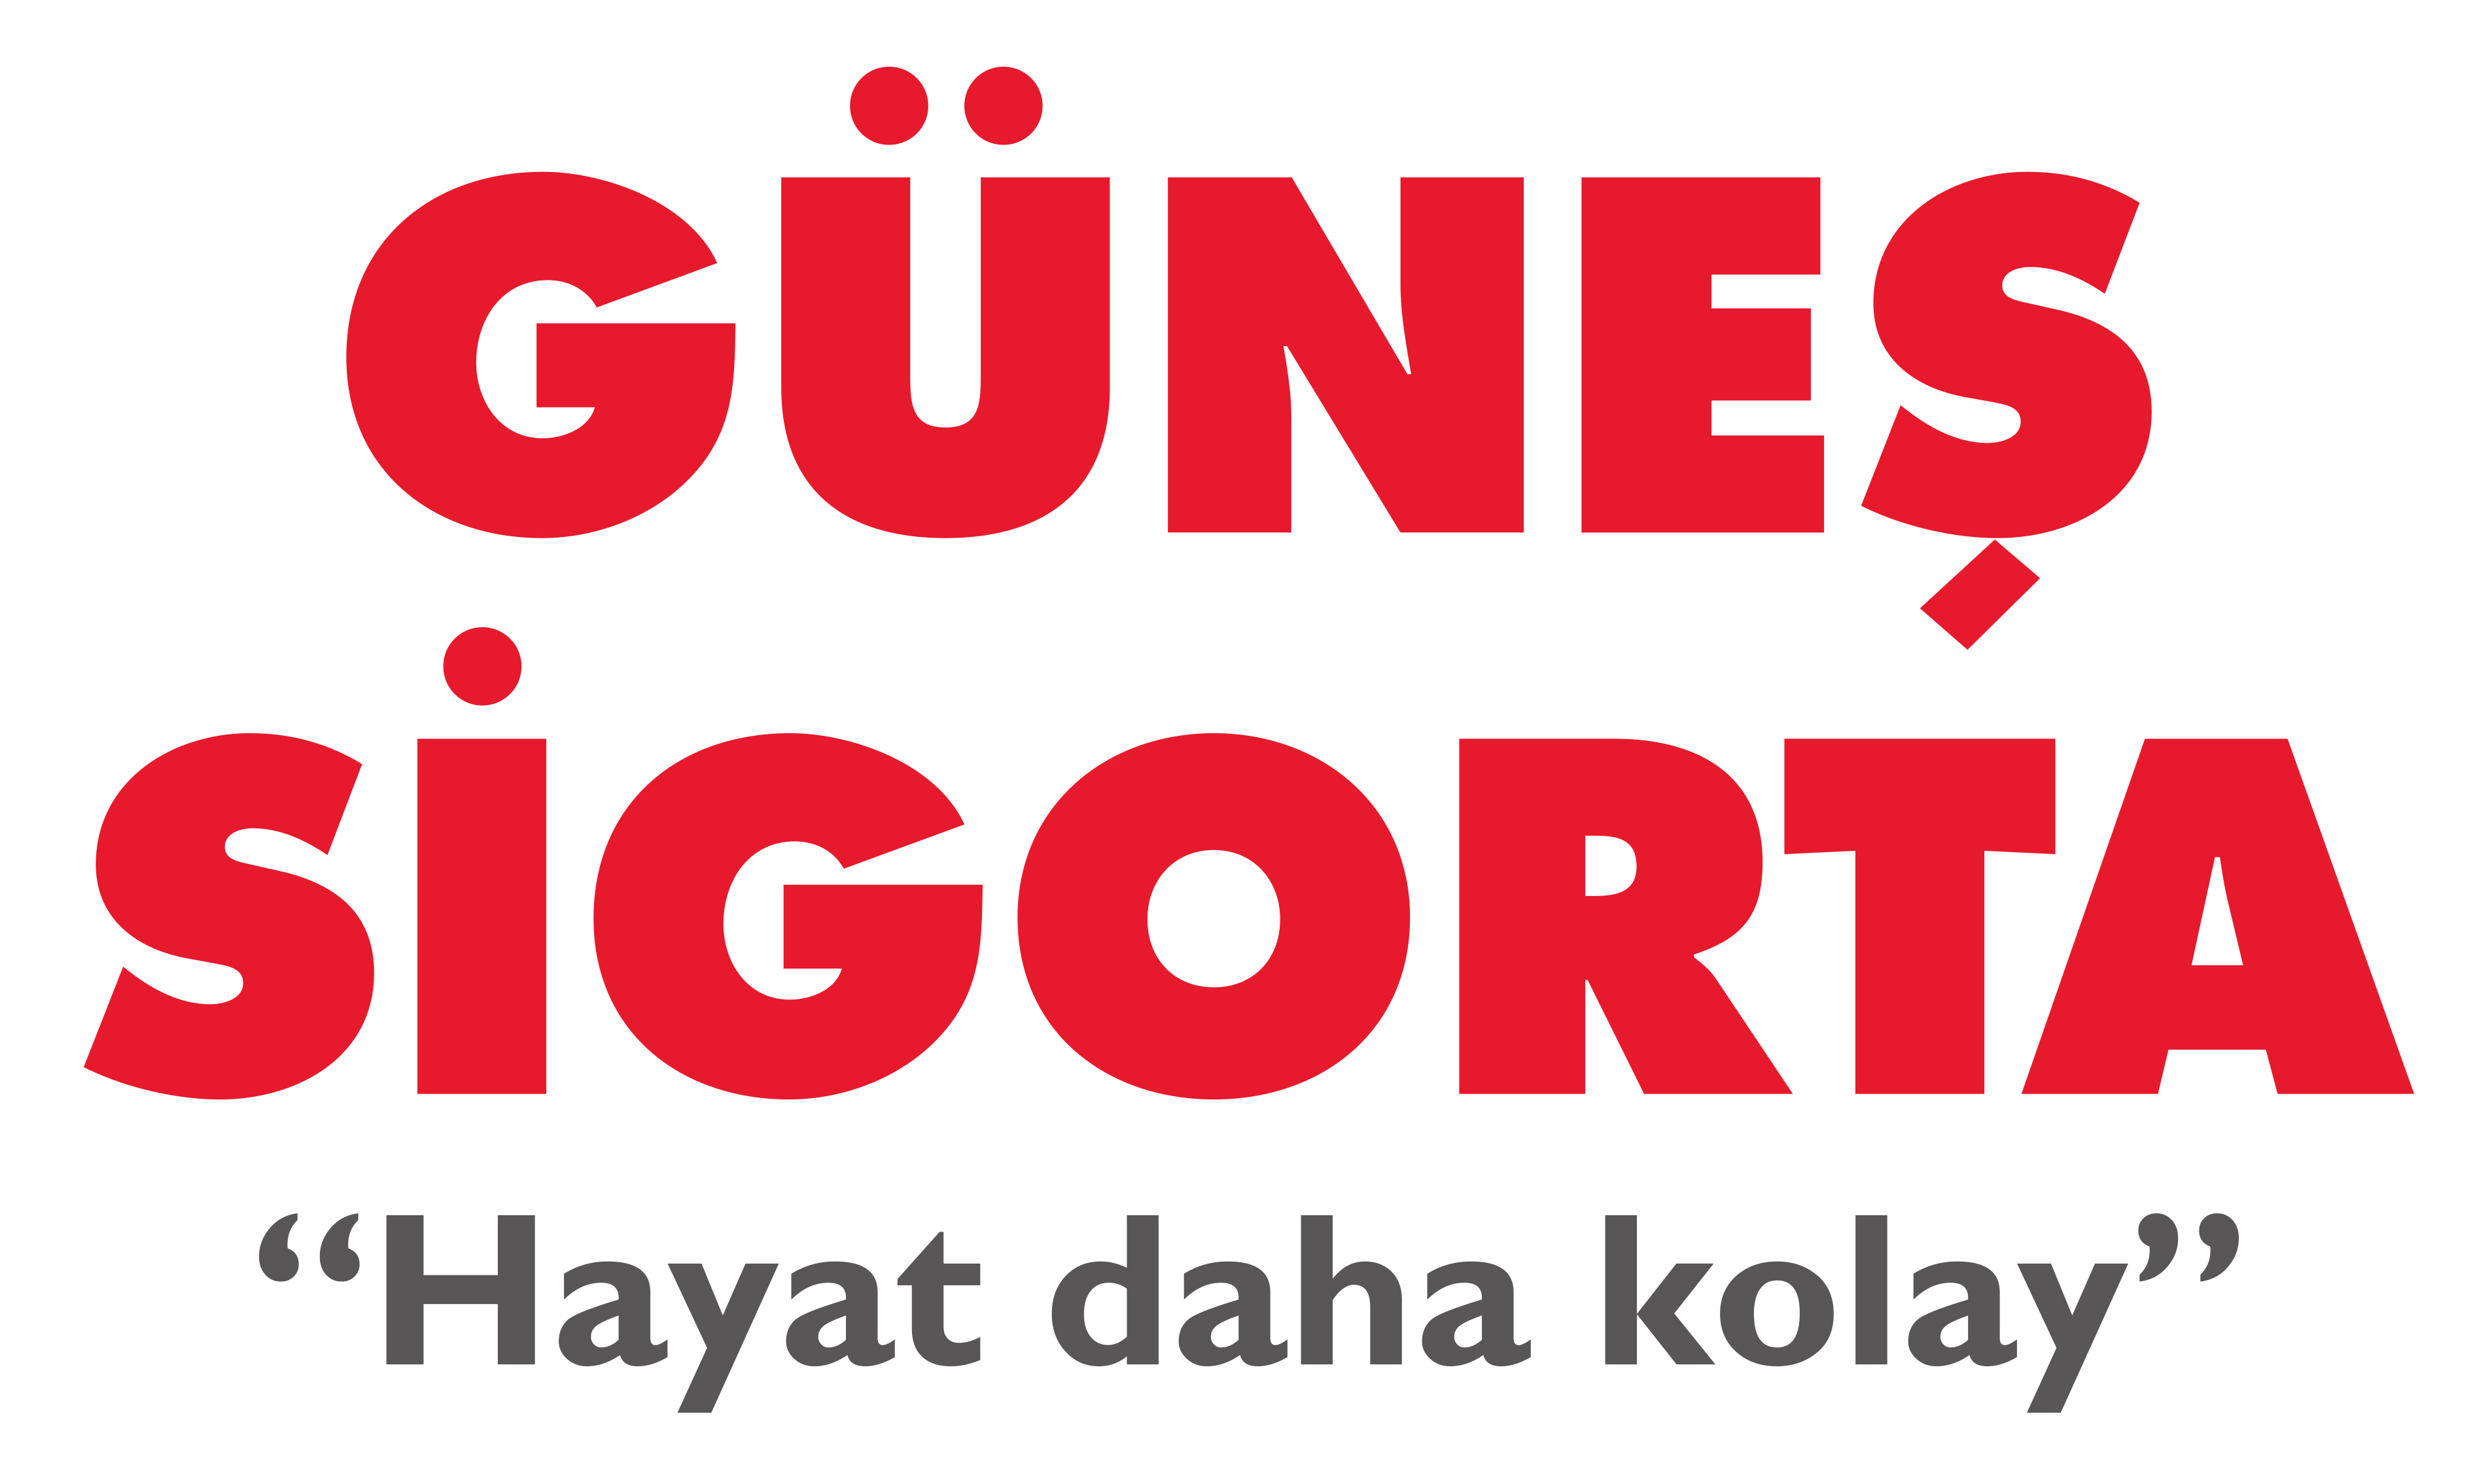 Gunes Sigorta Brand Logo